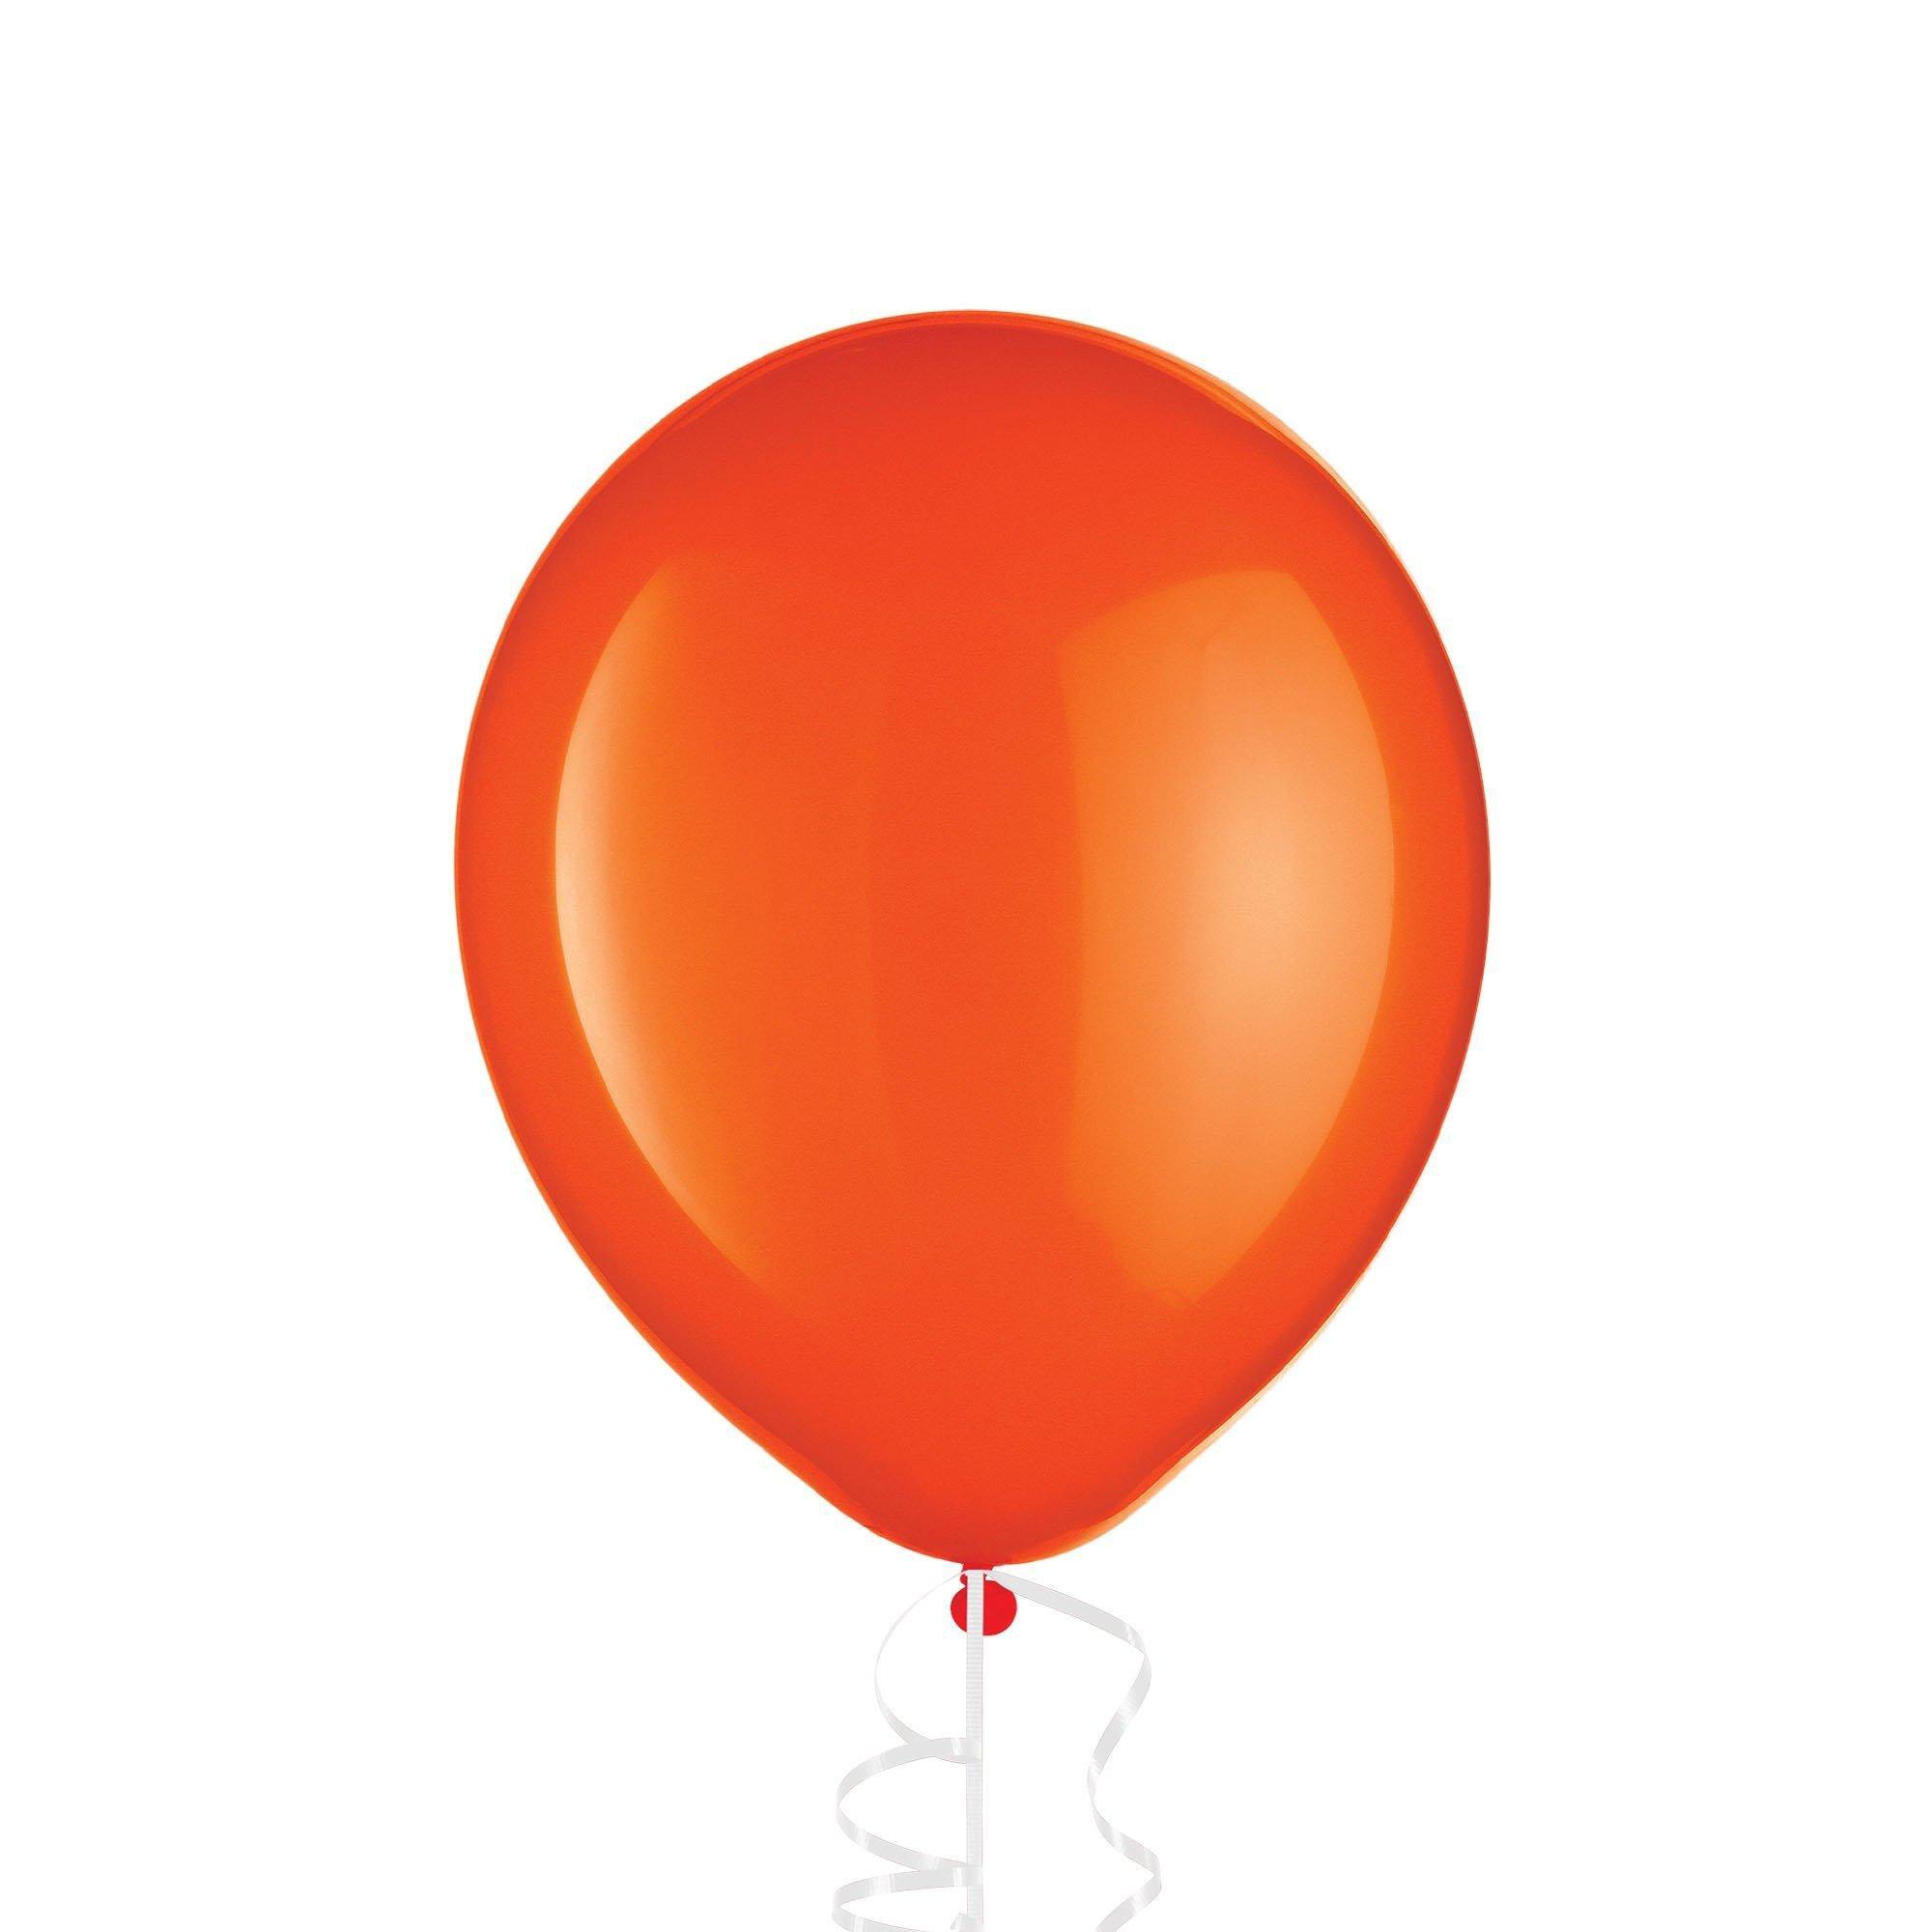 Olive lt Balloon Garland Premium Kit (8-10ft) Balloons by PopFestCo